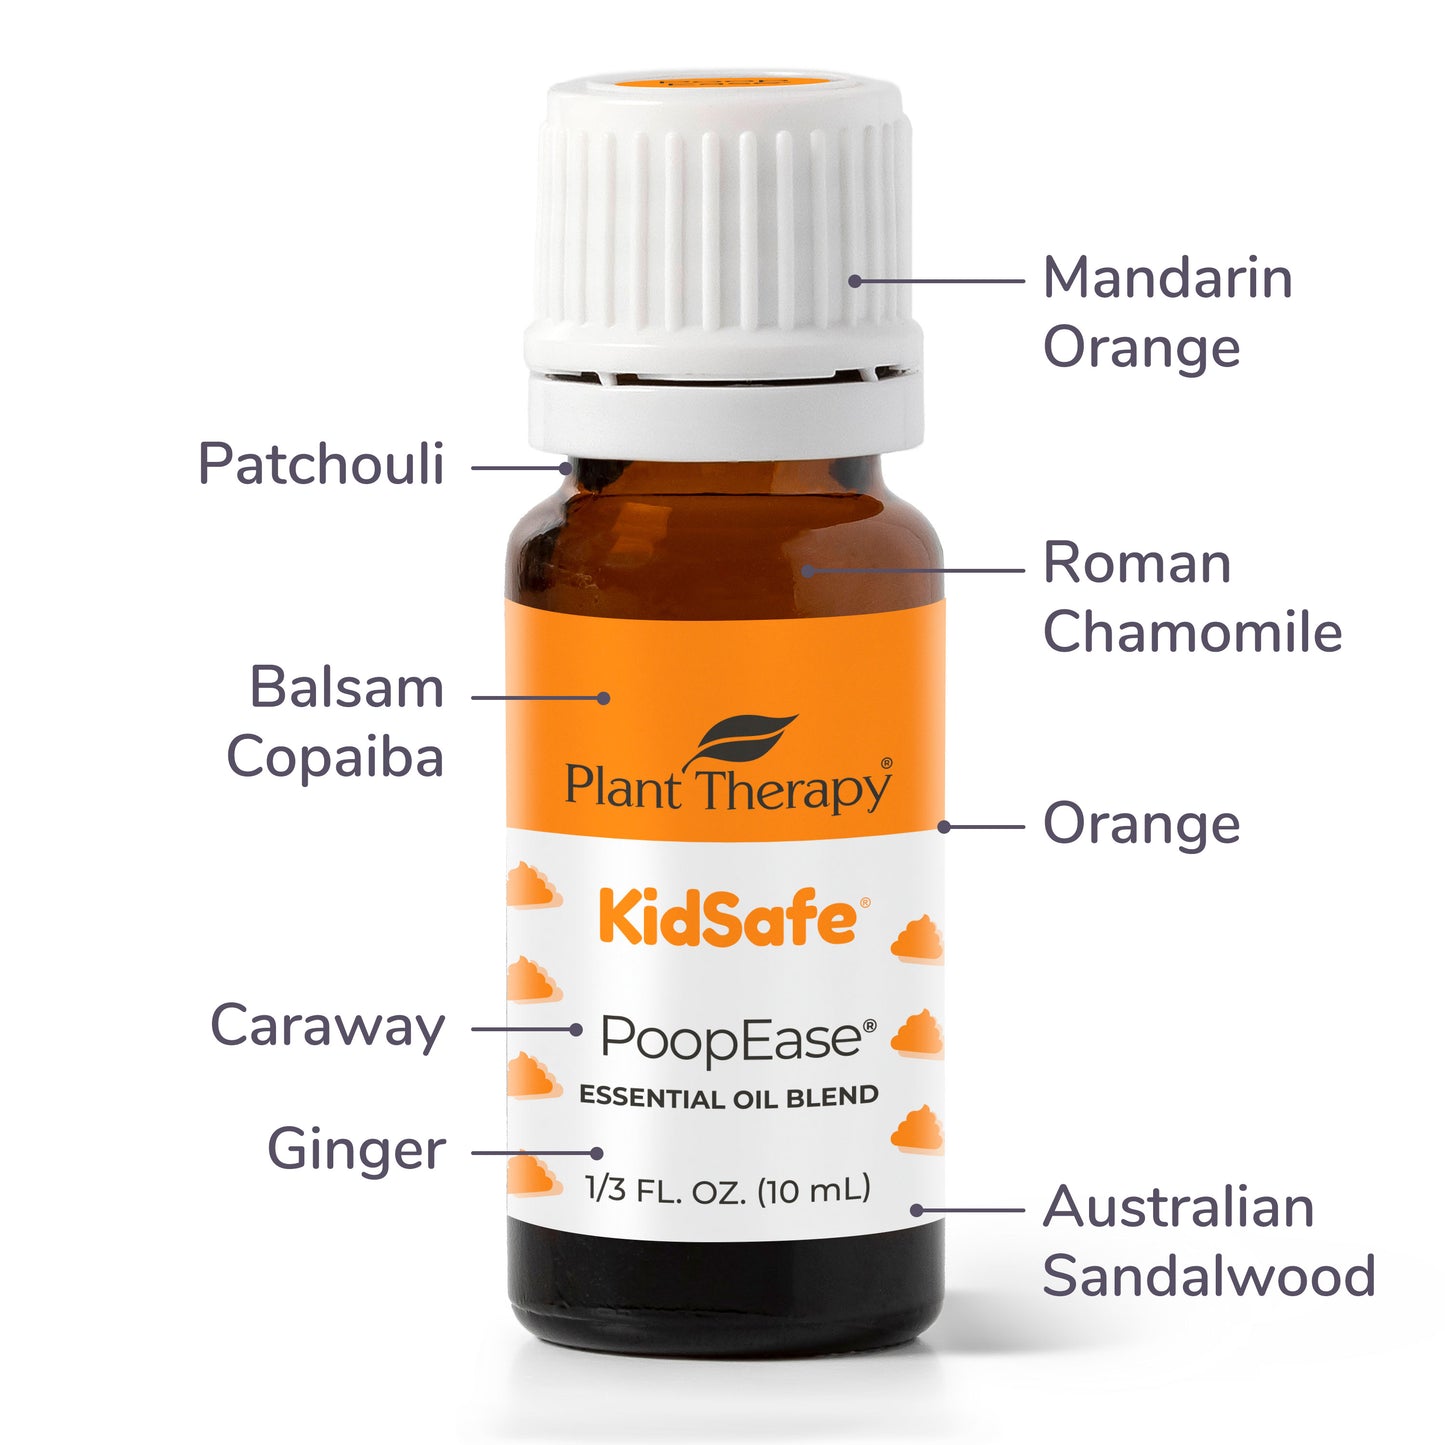 PoopEase KidSafe Essential Oil